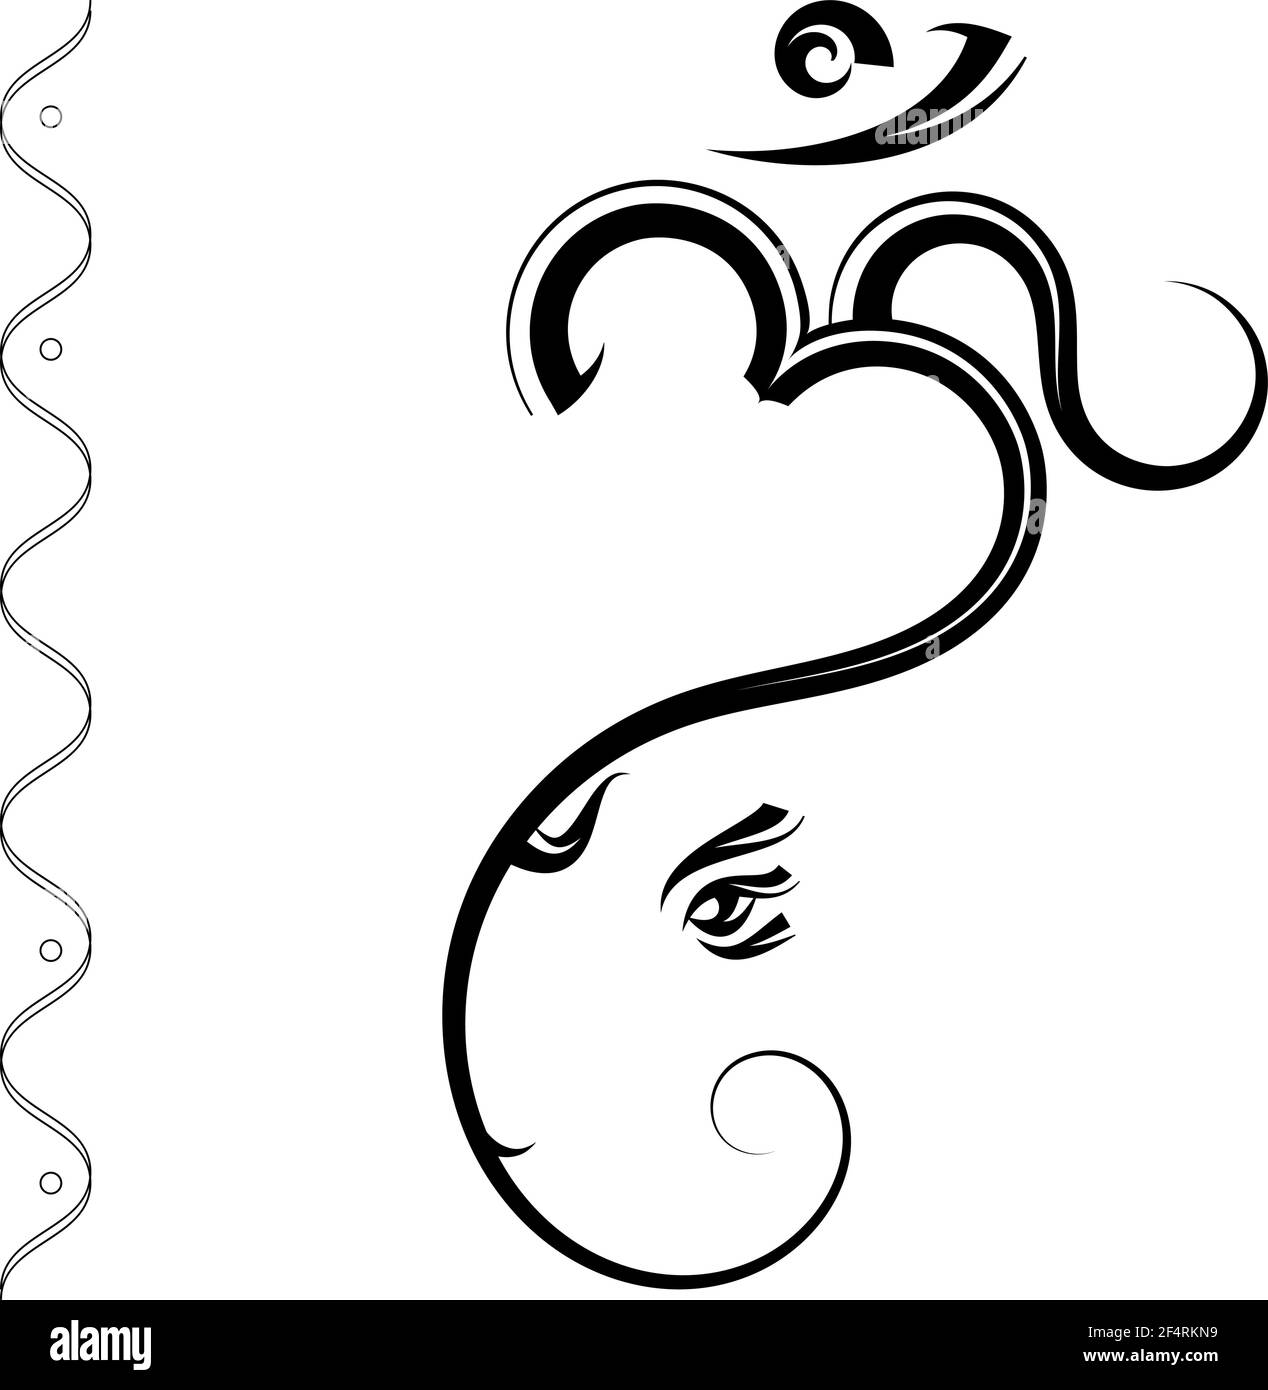 Ganesha Calligraphic Style Hand Drawn Design Vector Art Illustration Stock Vector